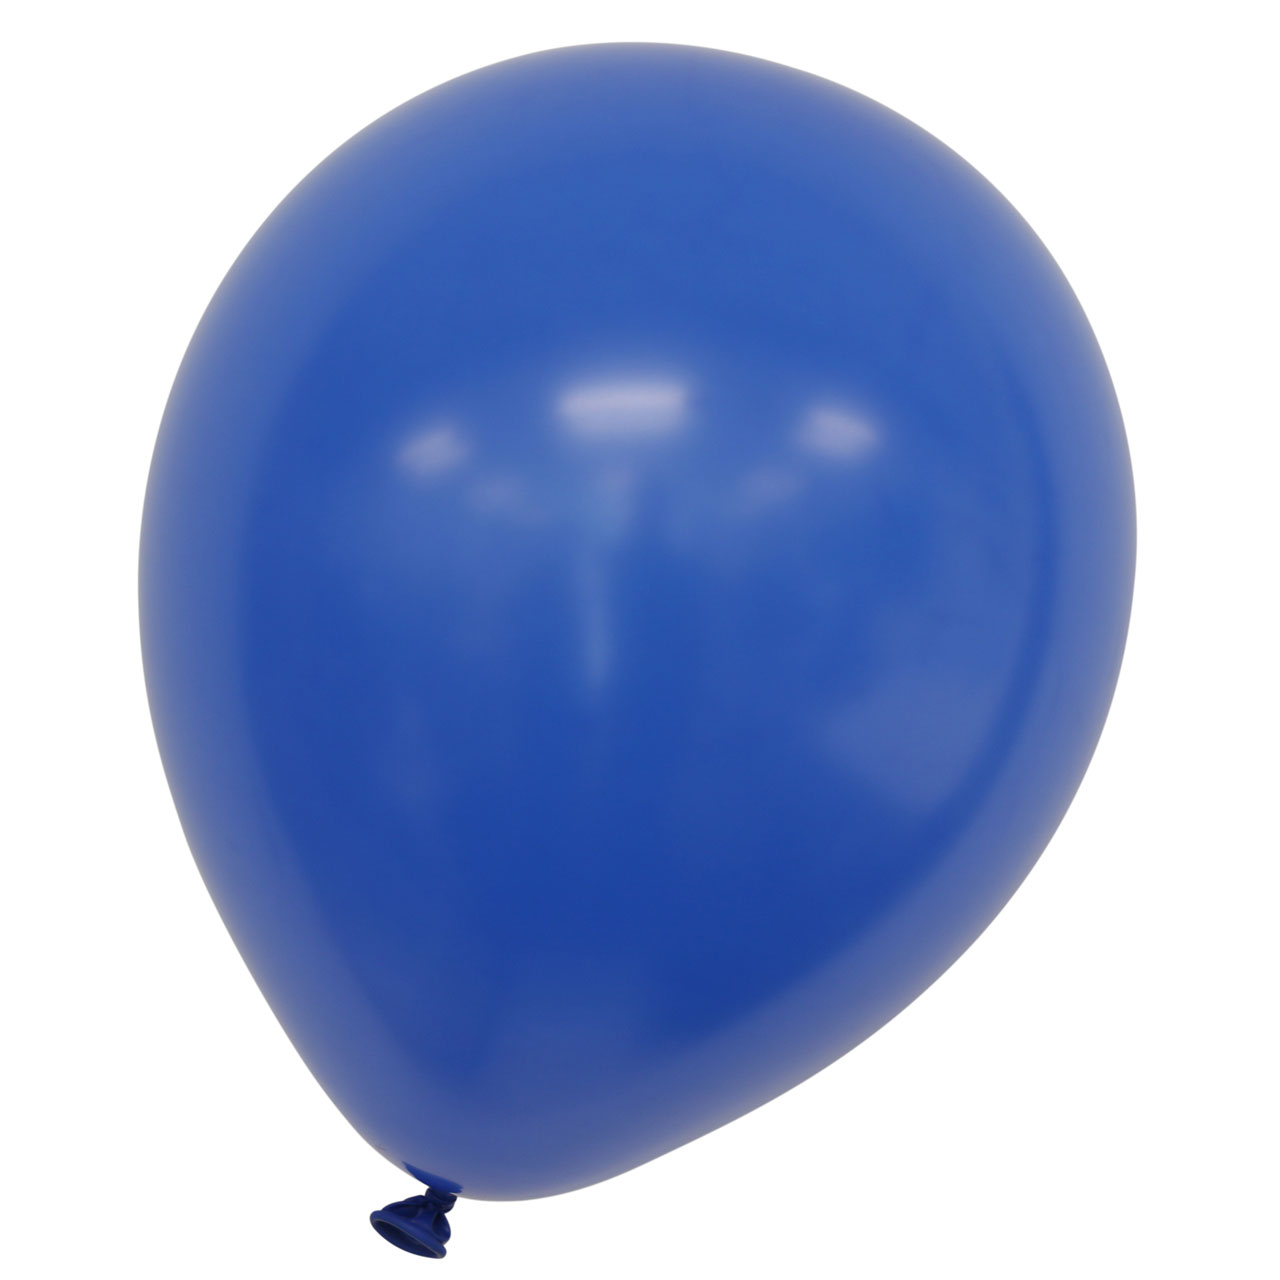 Baloni - plavi - Elmag d.o.o. - veleprodaja ugostiteljske i ...